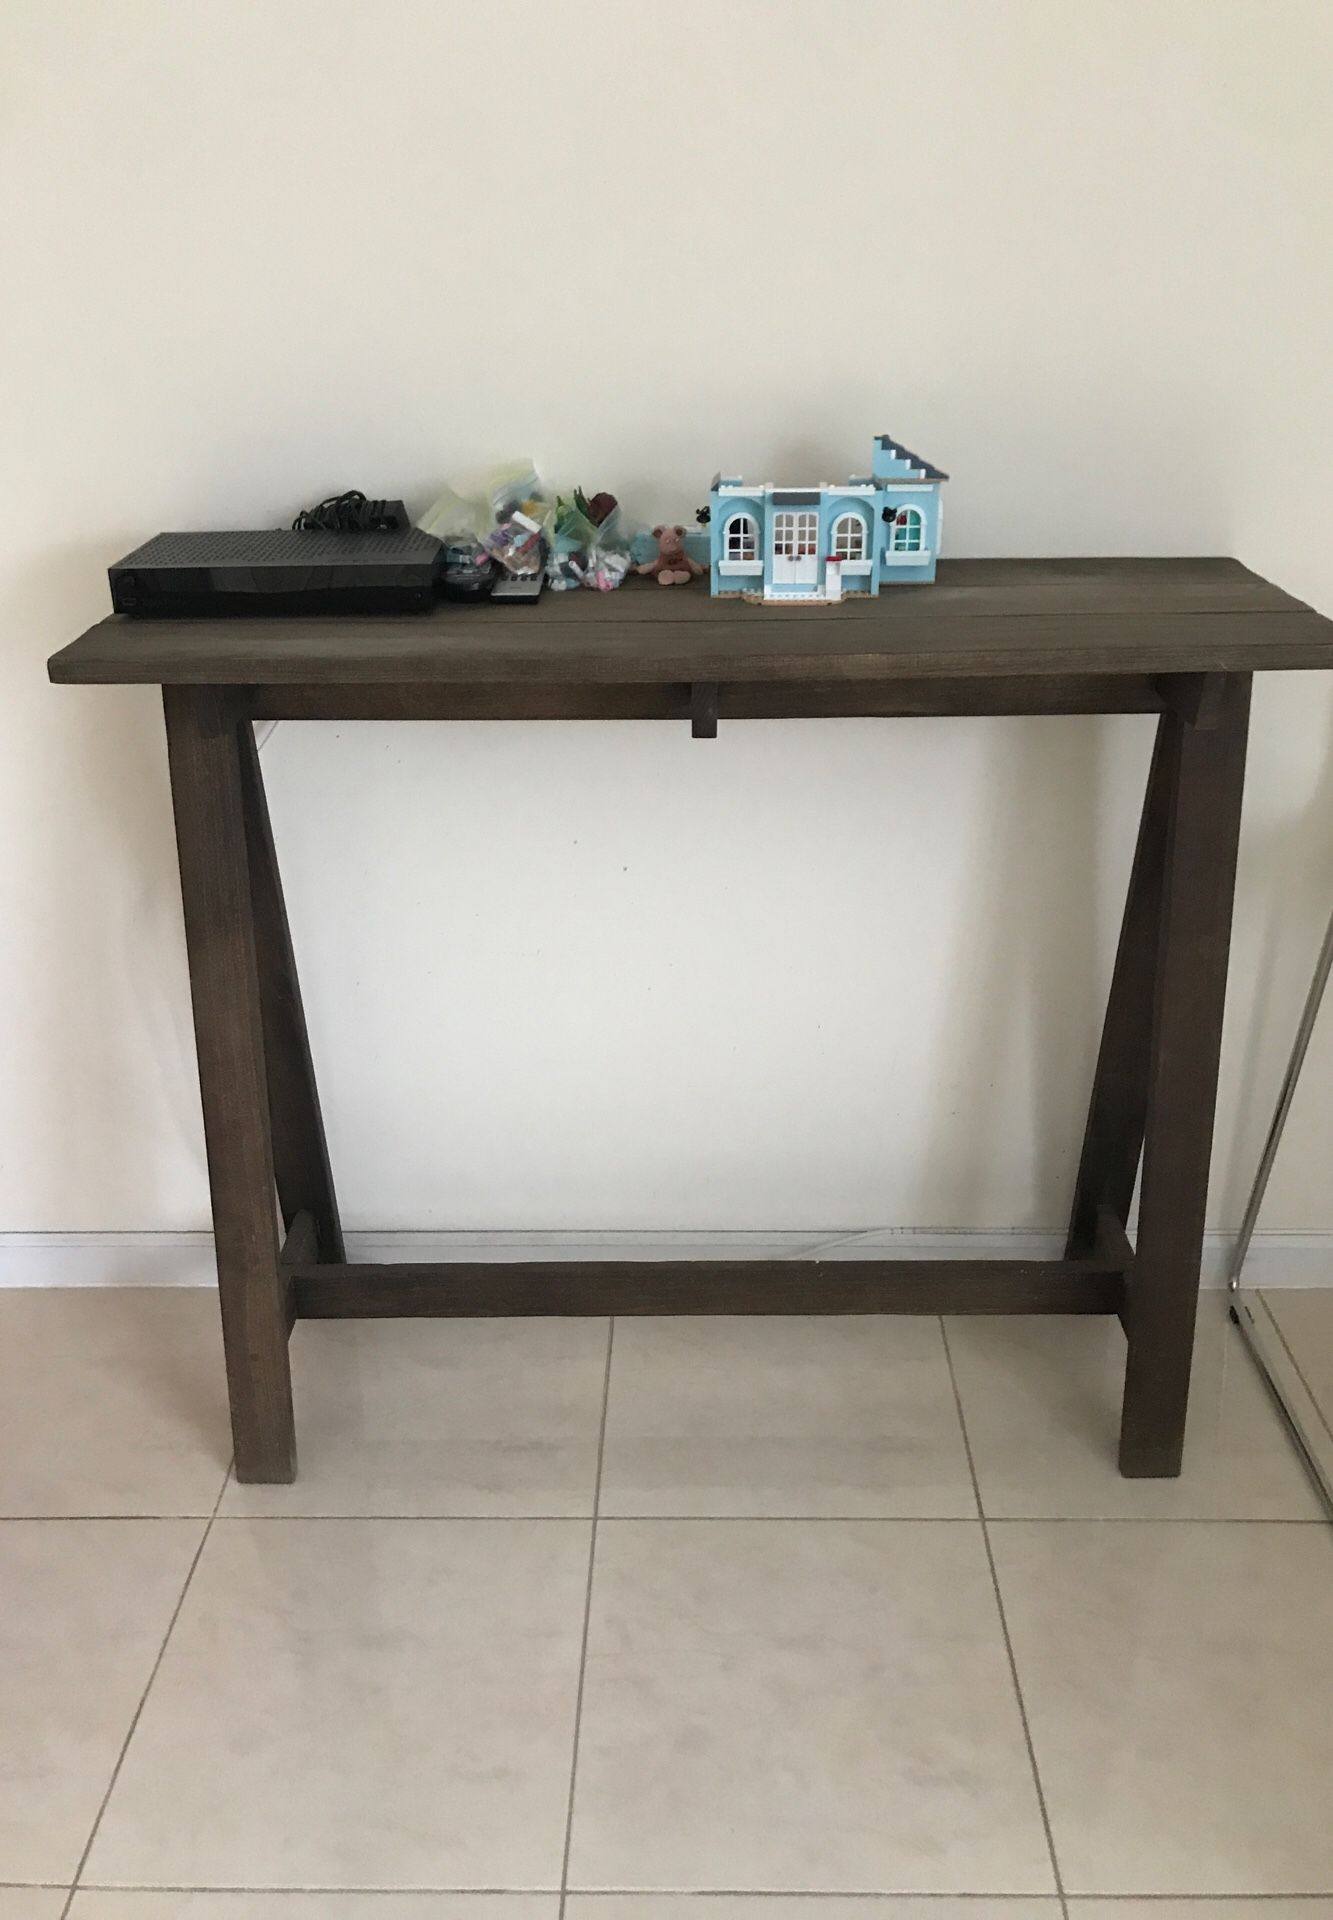 Wood bar stool from (HomeGoods) $30